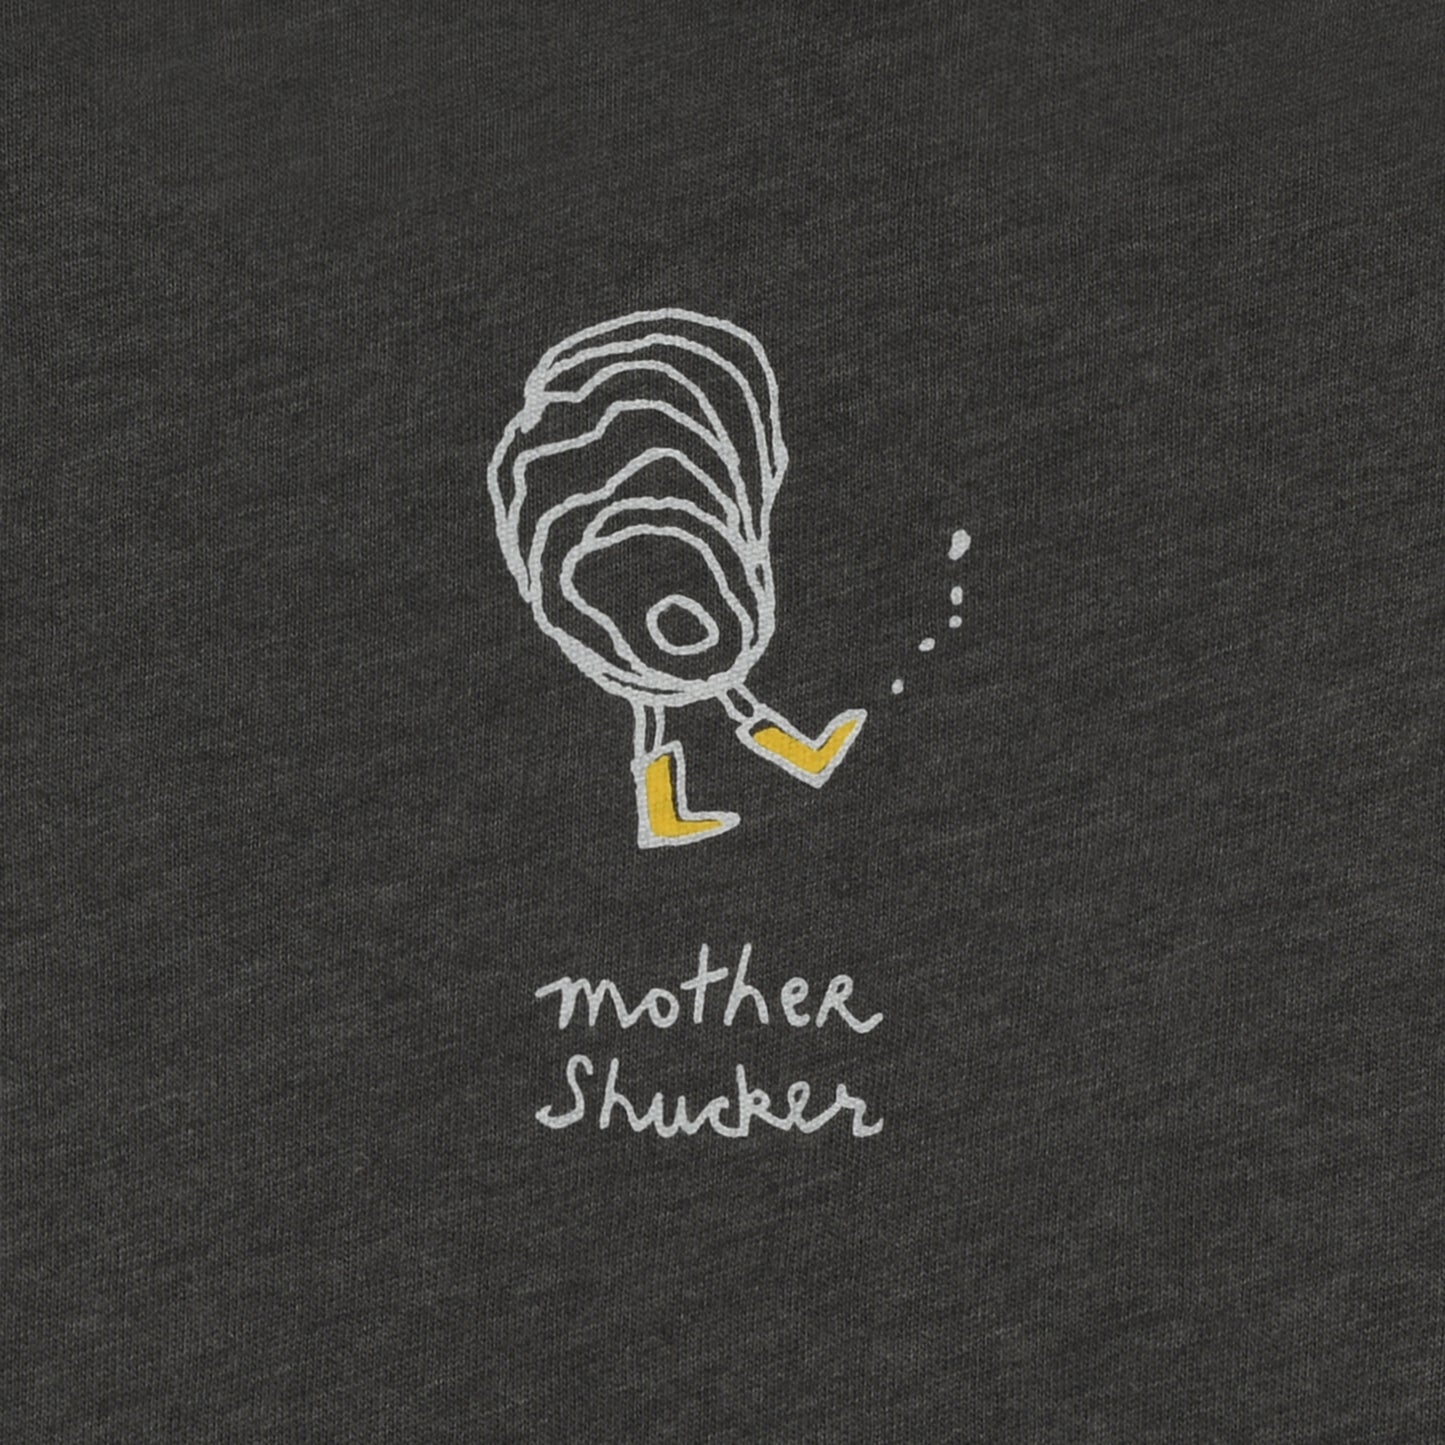 mother shucker tee